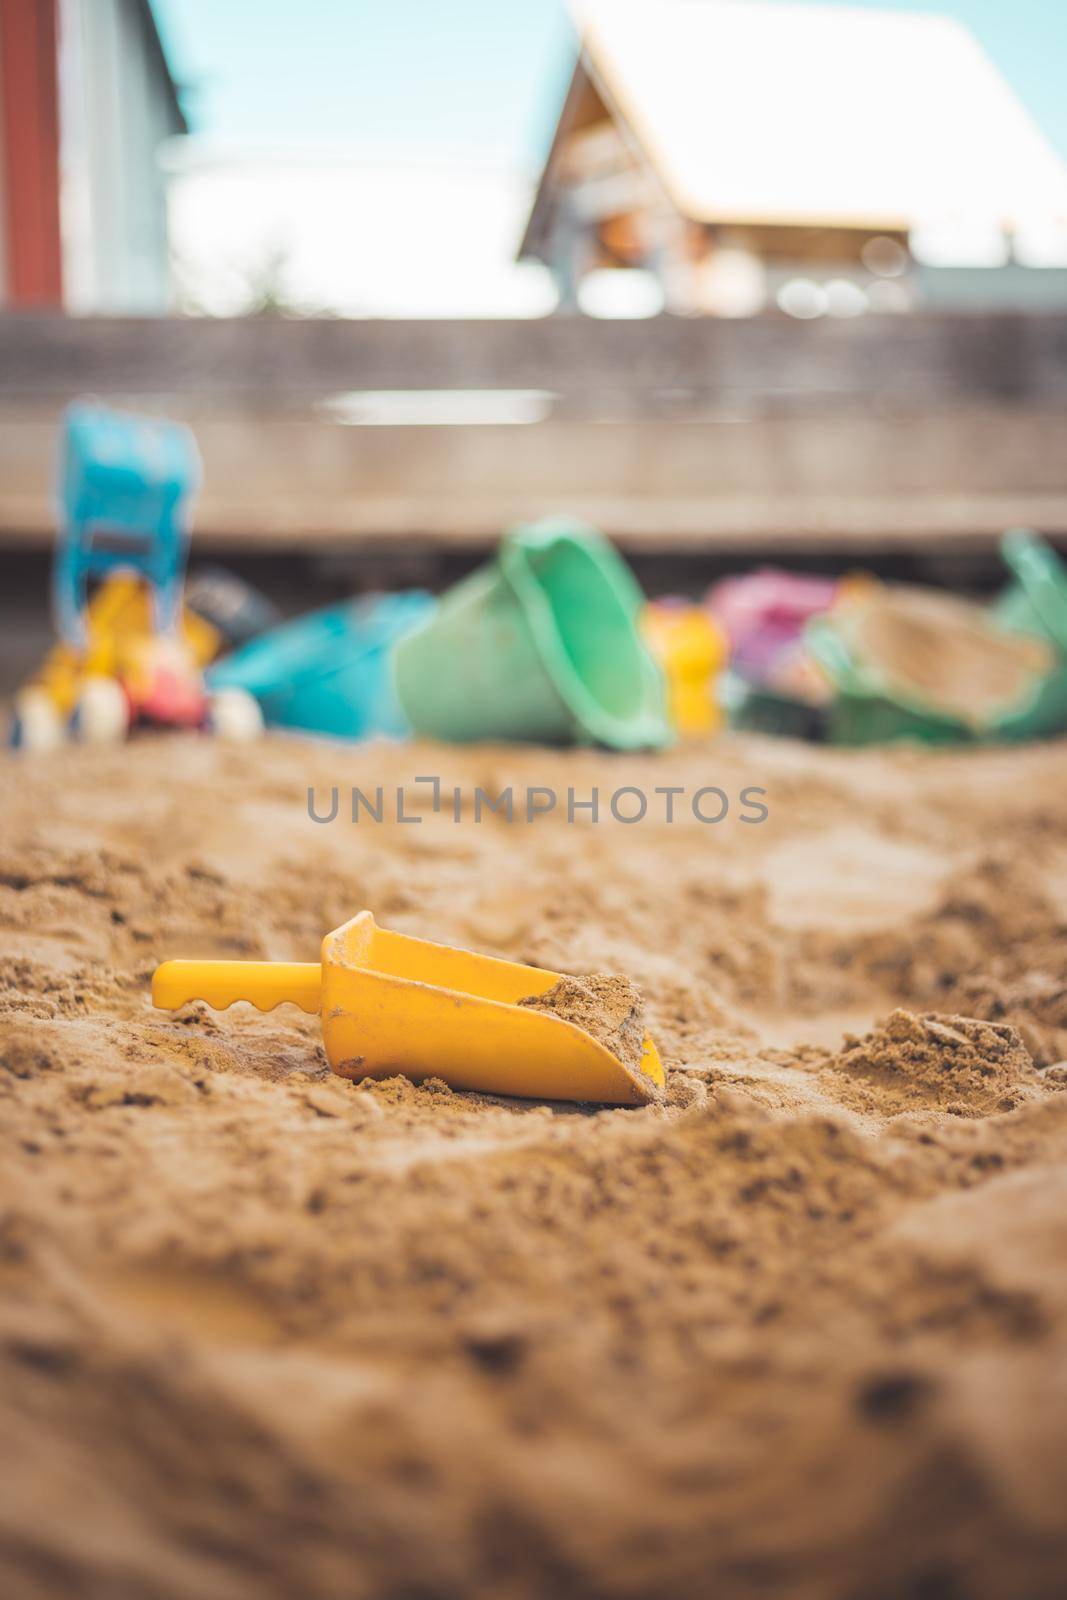 Children plastic toys in the sand box. Shovel, selective focus.